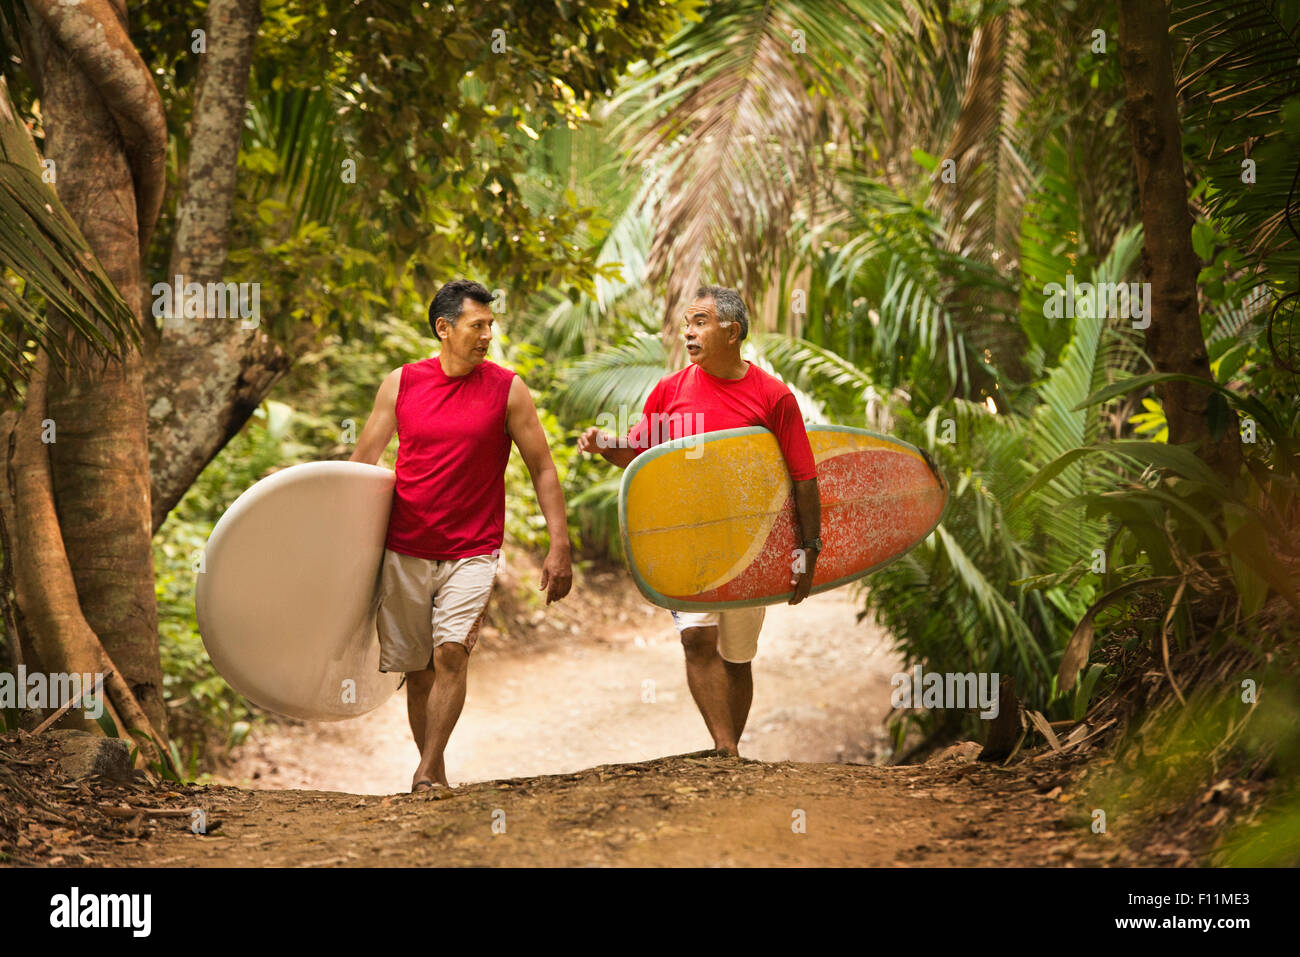 Hispanic men carrying surfboards on jungle trail Stock Photo